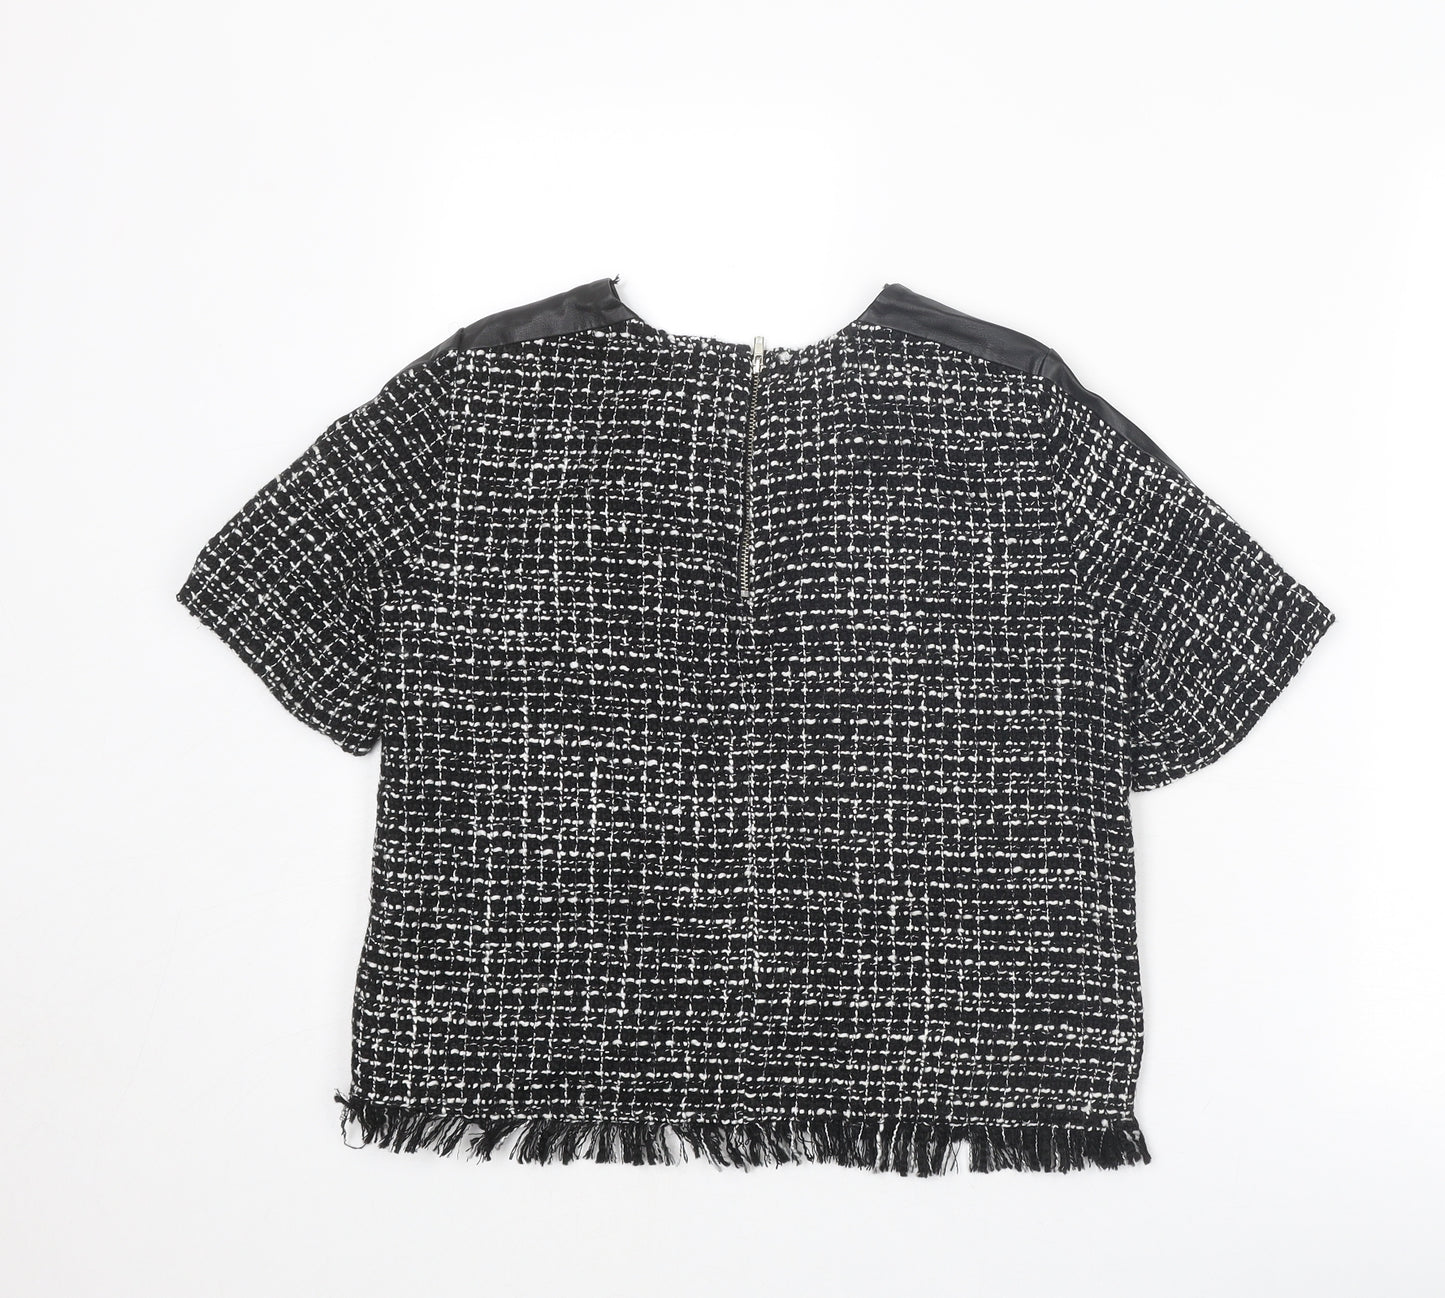 Zara Womens Black Cotton Basic Blouse Size M Boat Neck - Tweed Faux Leather